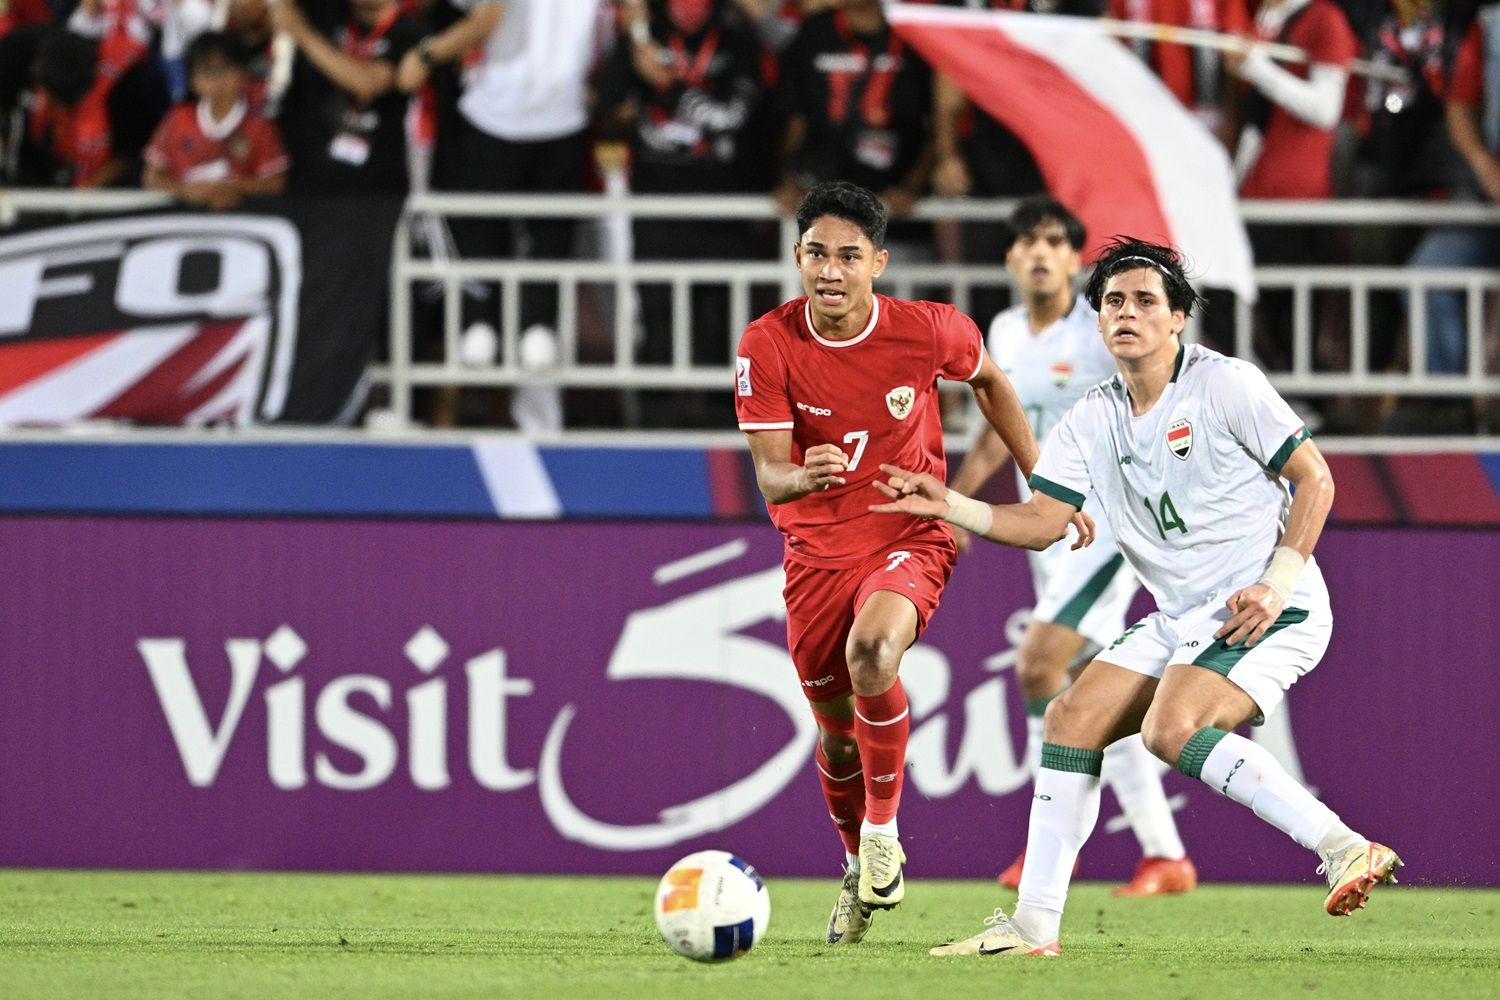 Pesepak bola Timnas Indonesia U-23 Marselino Ferdinan (kiri) melewati hadangan pesepak bola Timnas Irak U-23 Karrar Mohammed Ali (kanan) dalam pertandingan perebutan tempat ketiga Piala Asia U-23 2024 di Stadion Abdullah bin Khalifa, Doha, Qatar, Jumat, 3 Mei 2024 dini hari.